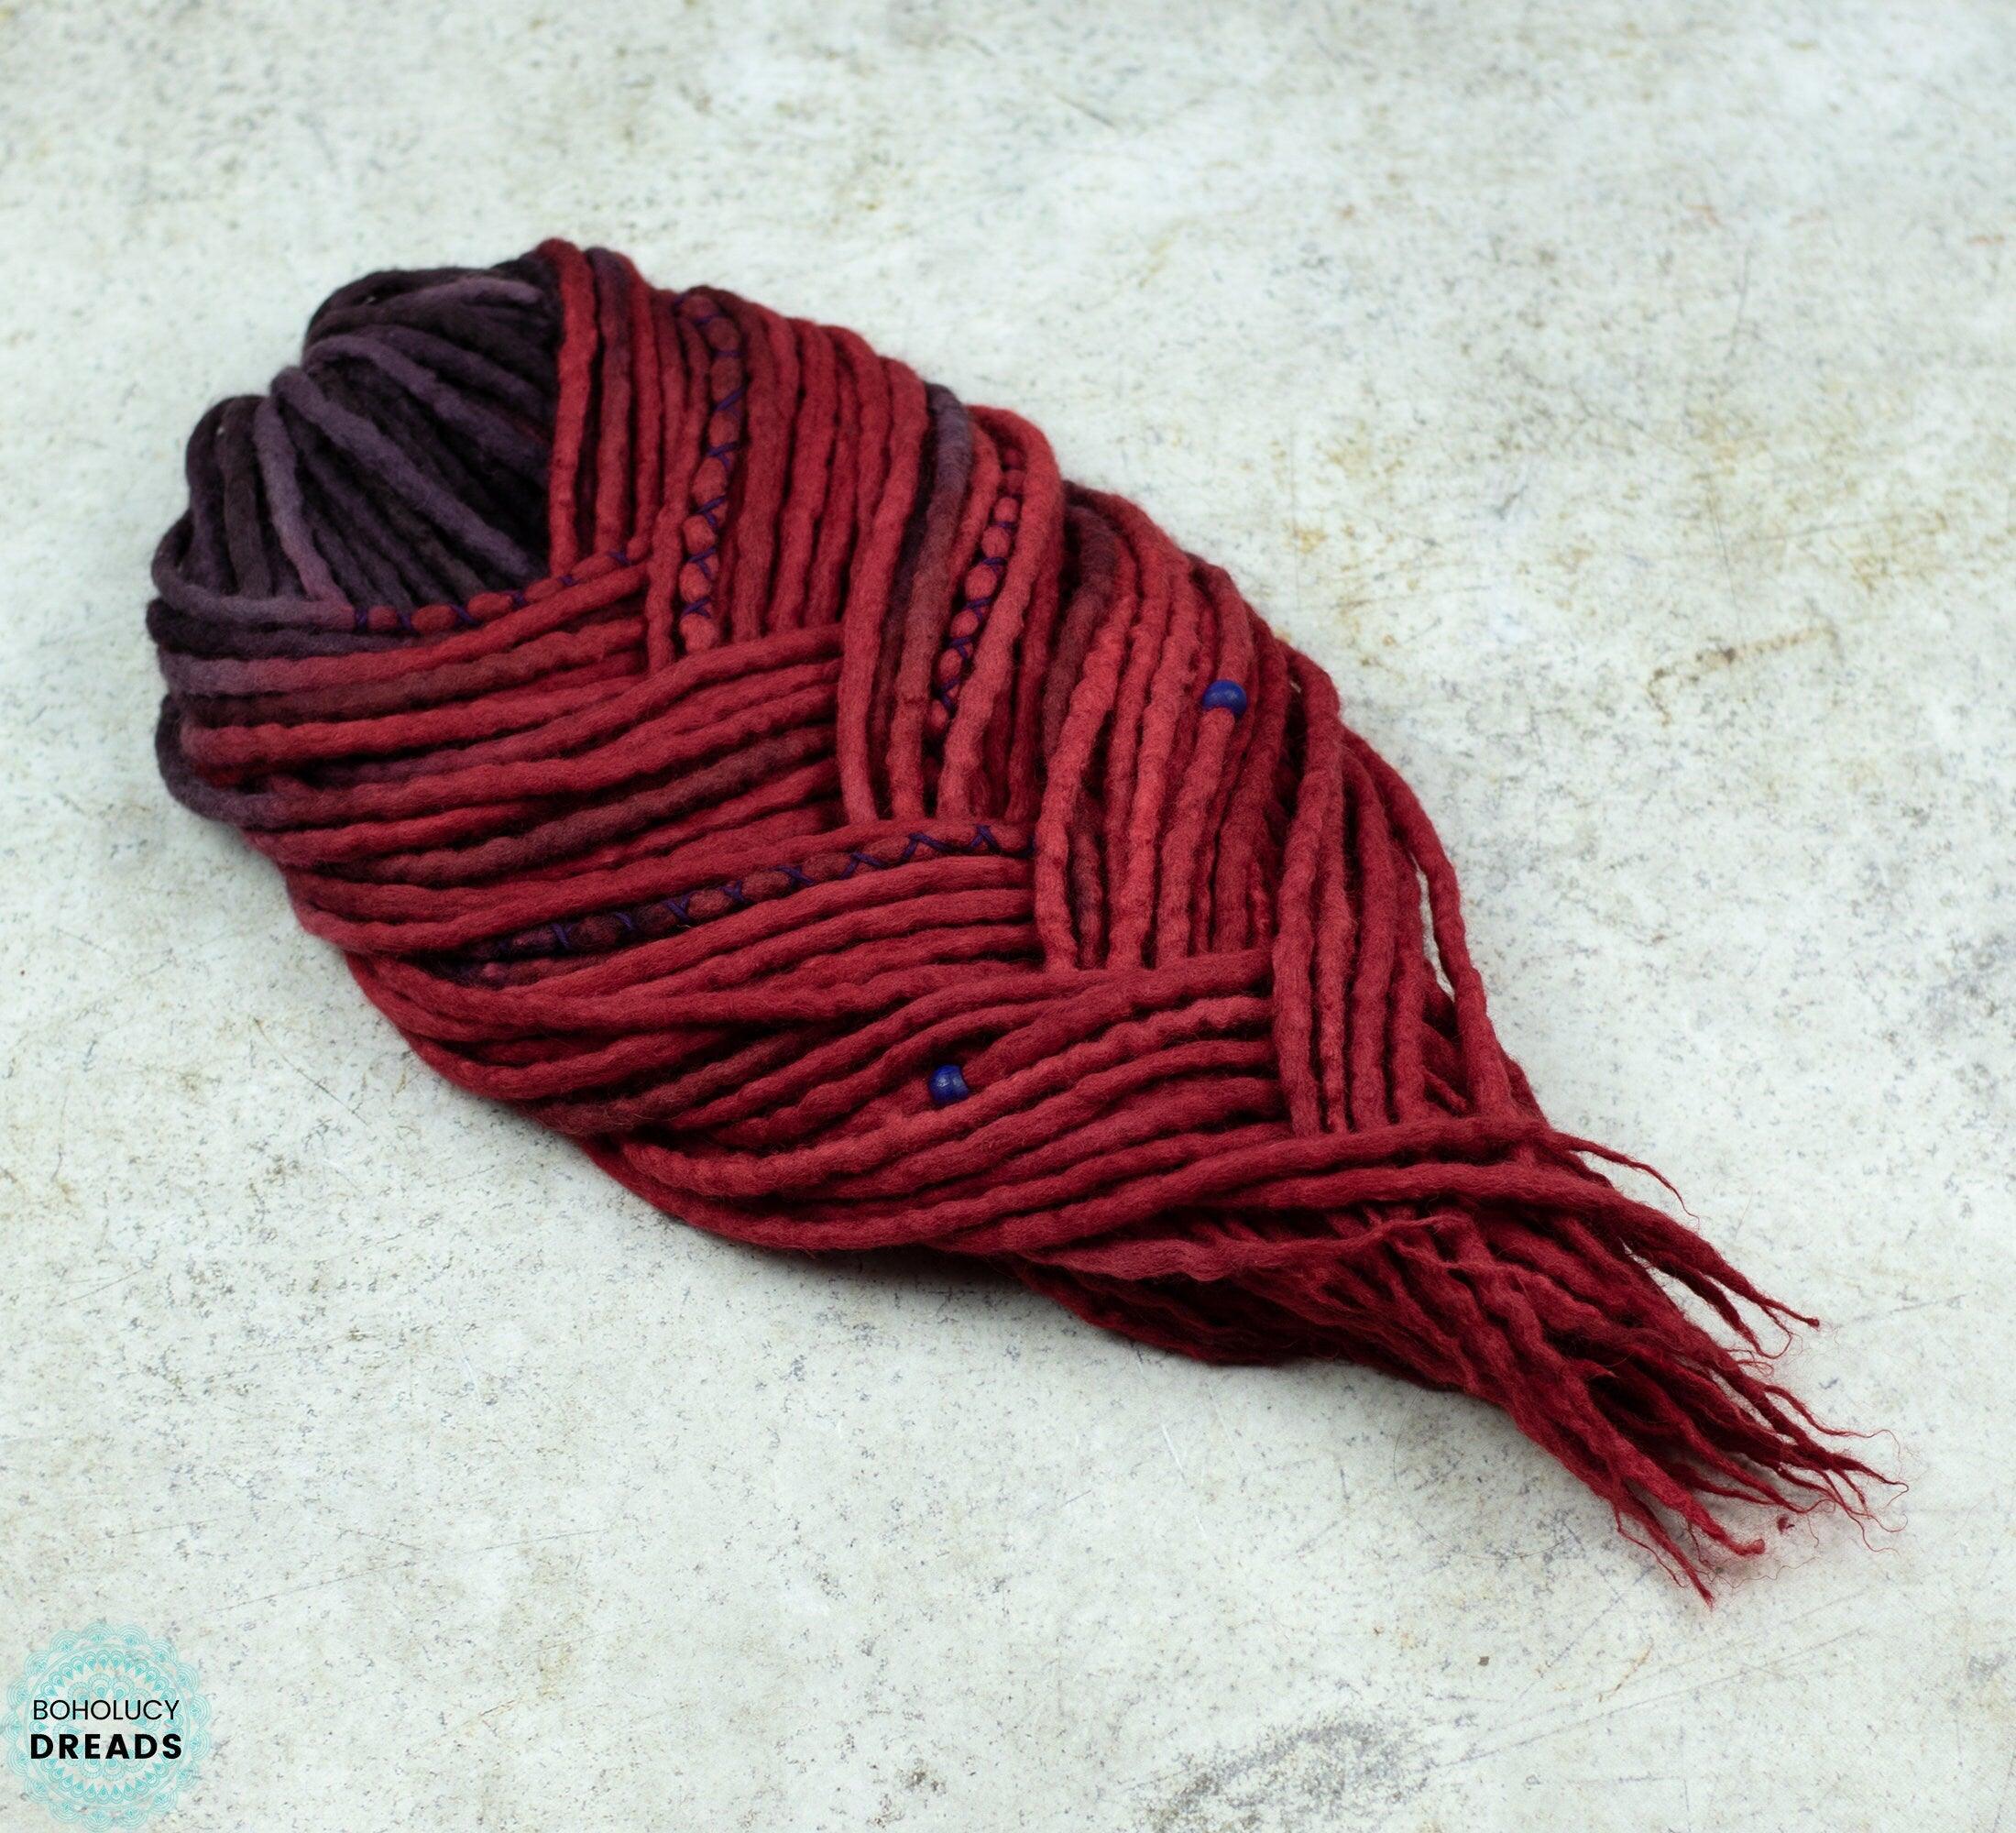 Aubergine ombre hand-dyed wool dreadlocks